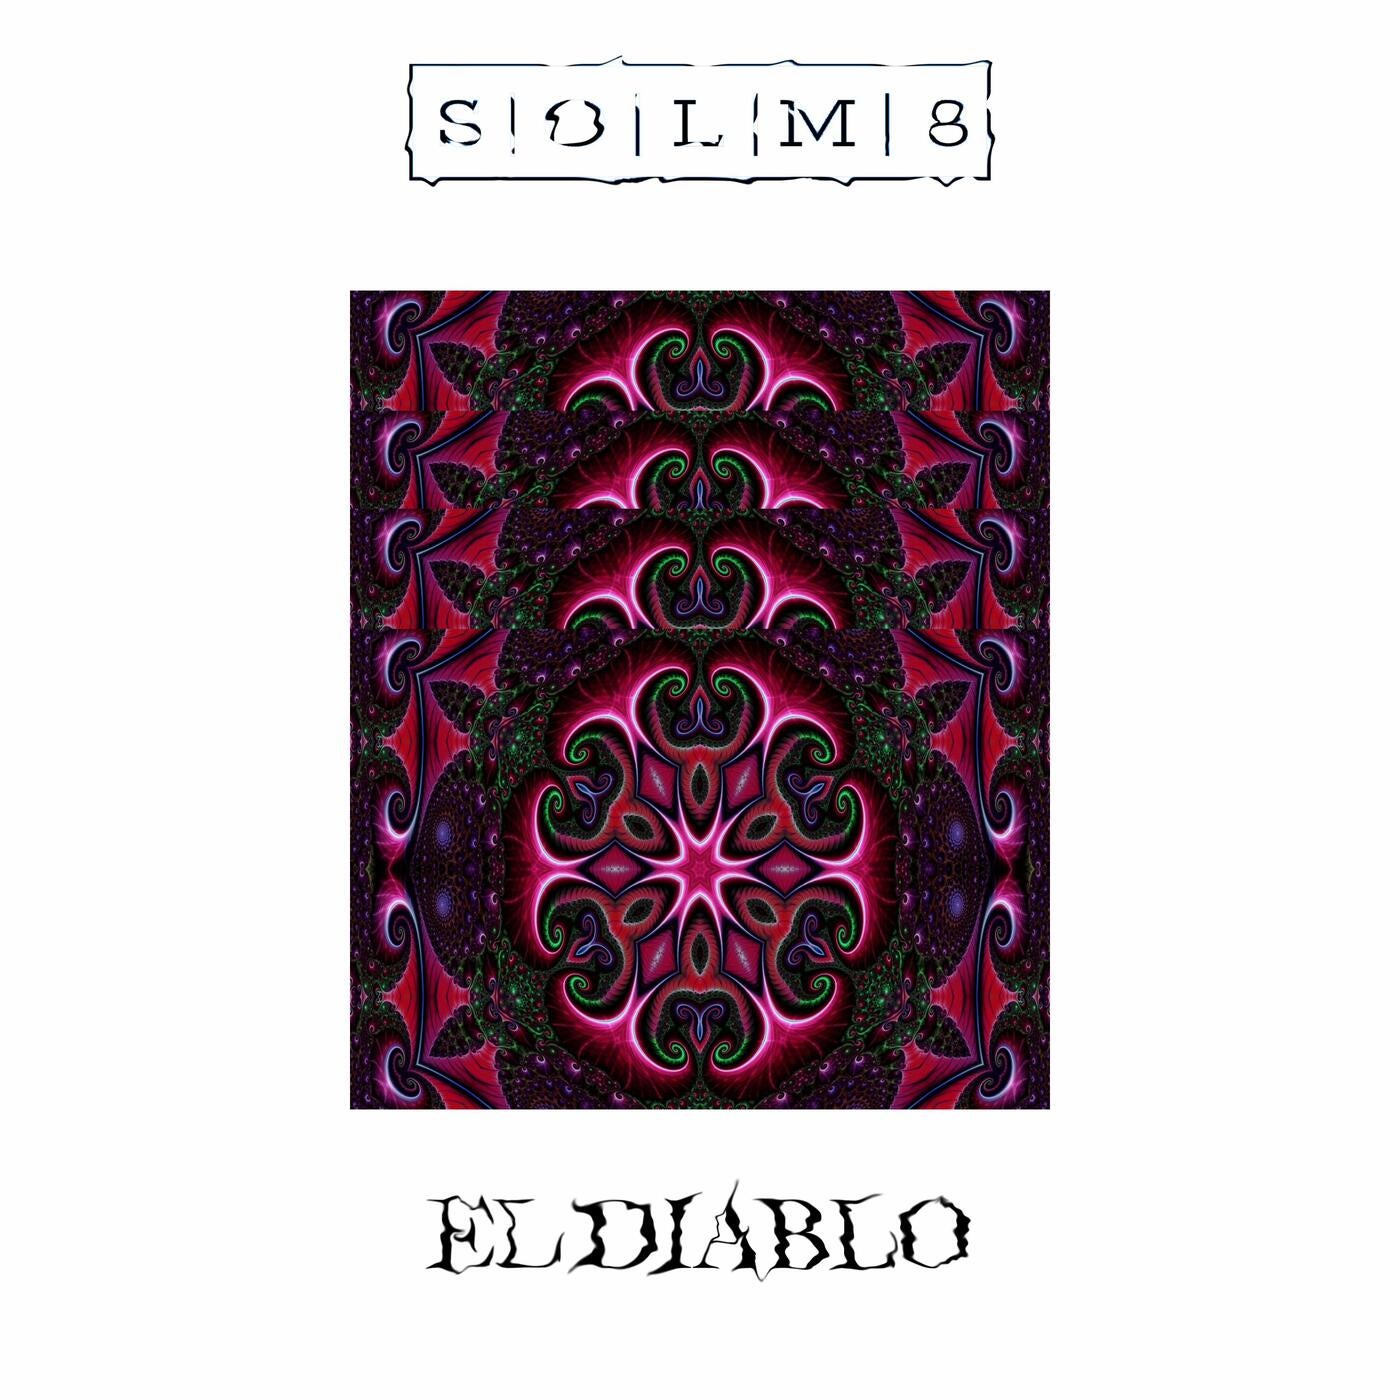 Music Album Cover Illustrations by El Diablo